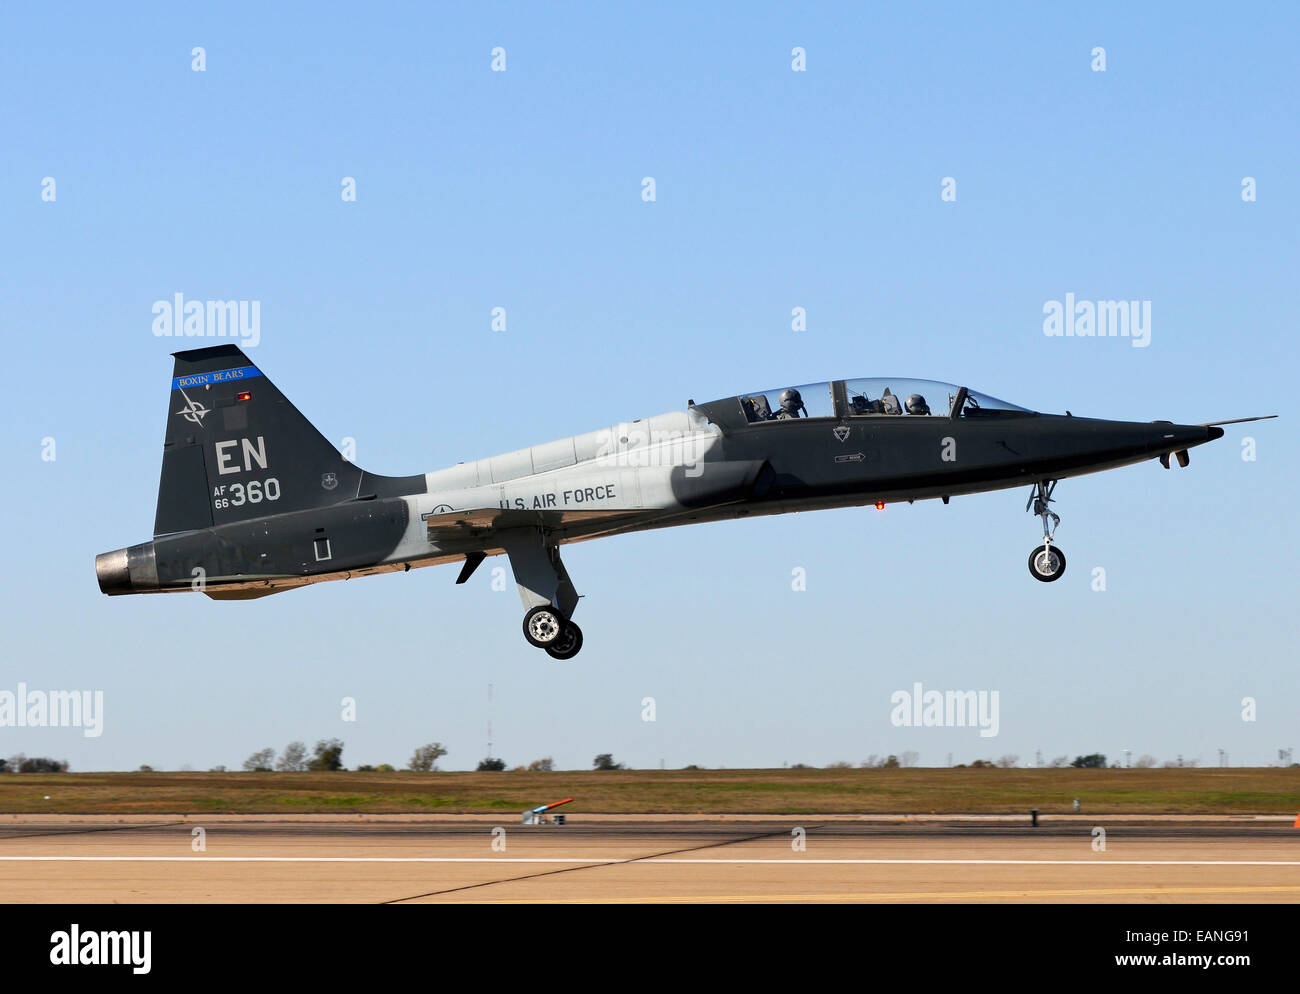 U.S. Air Force T-38 Talon landing at Sheppard Air Force Base, Texas. Stock Photo